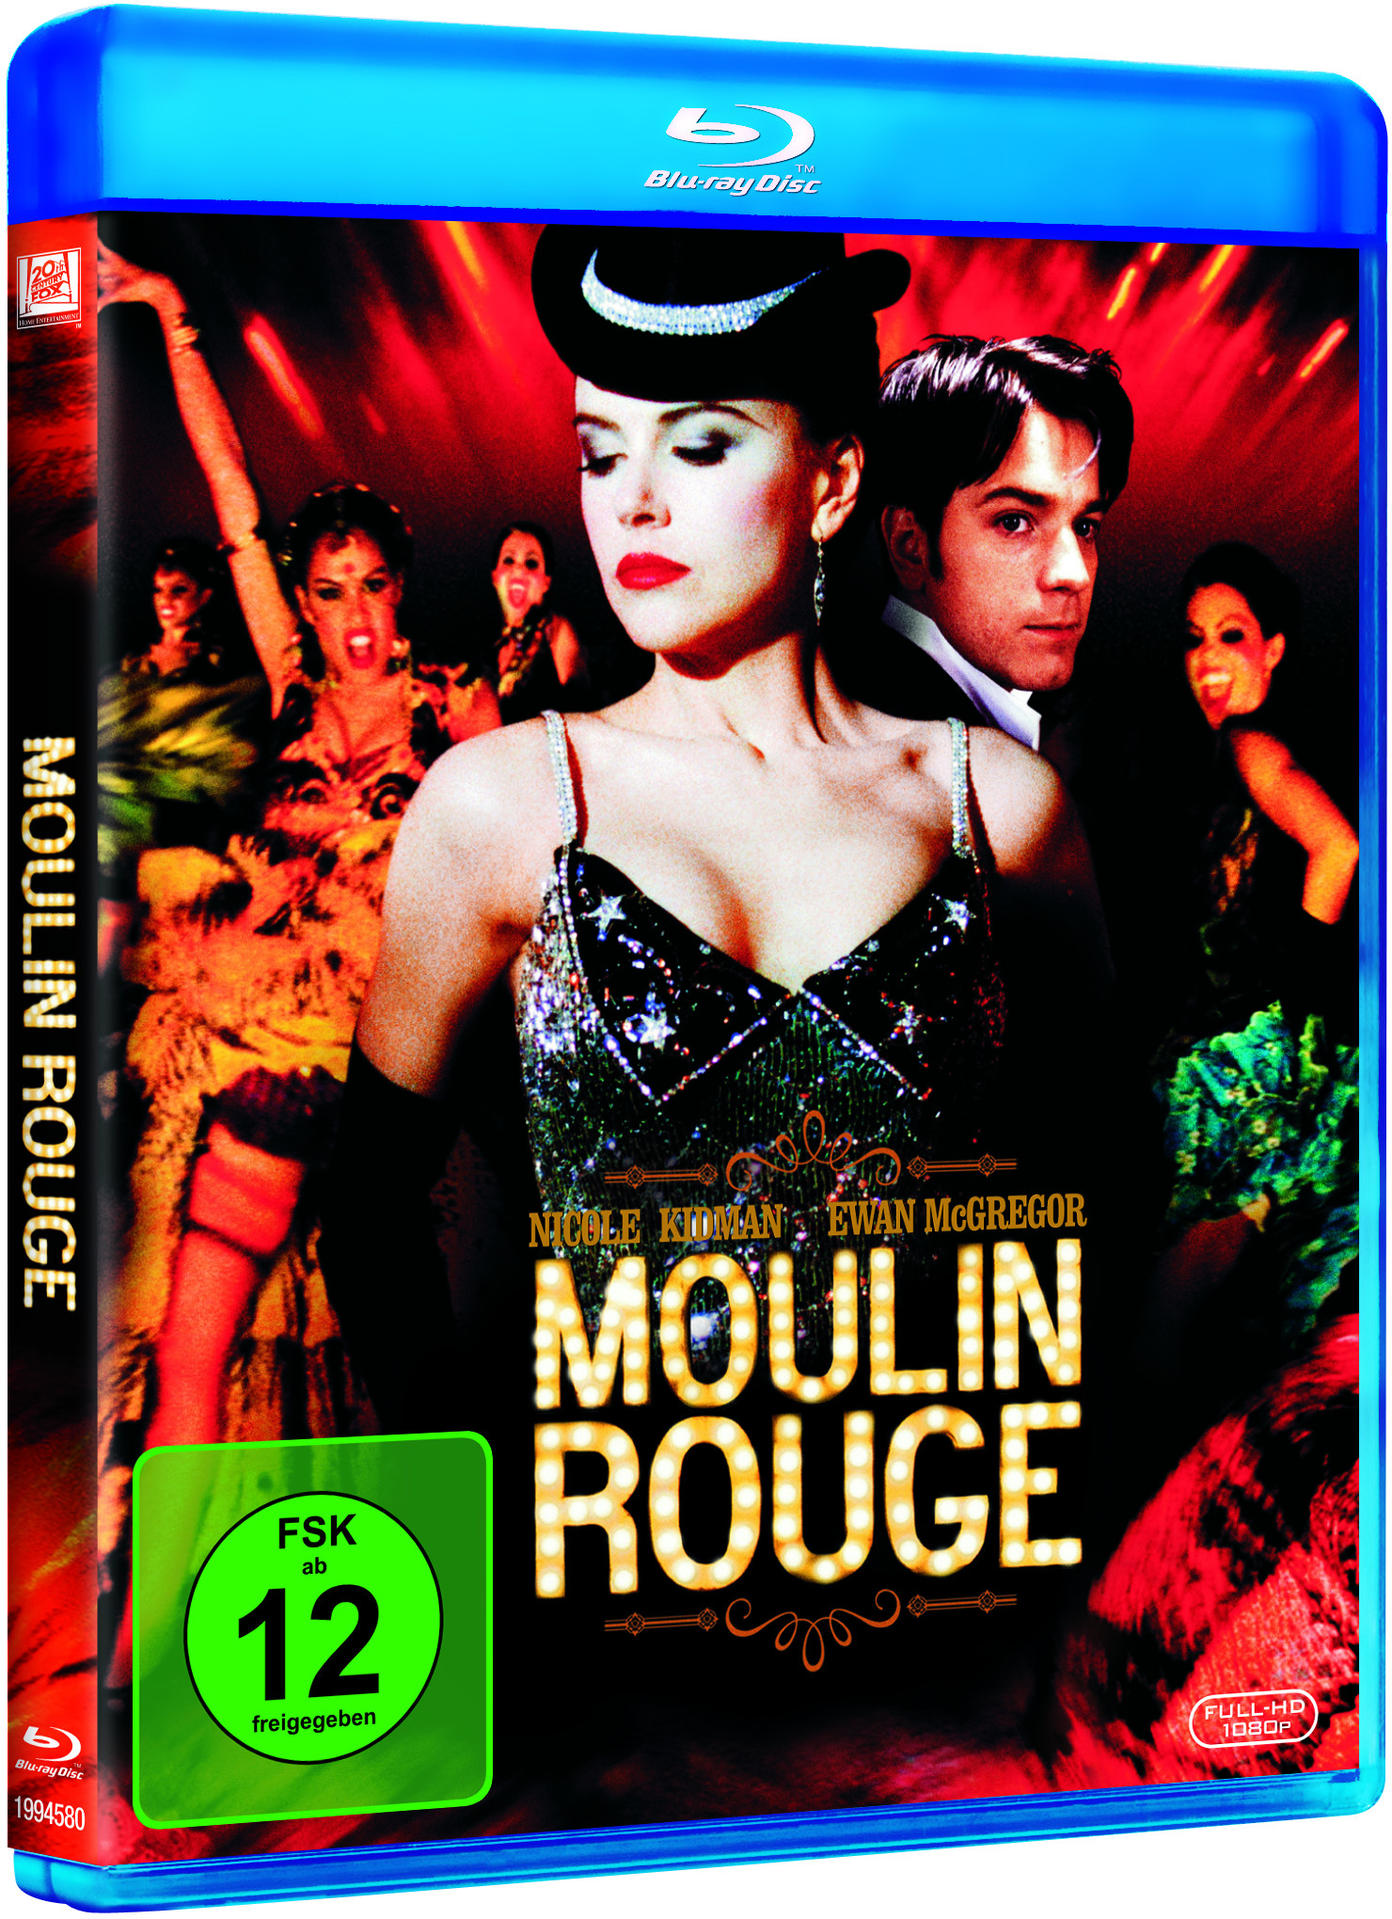 Blu-ray Rouge Moulin